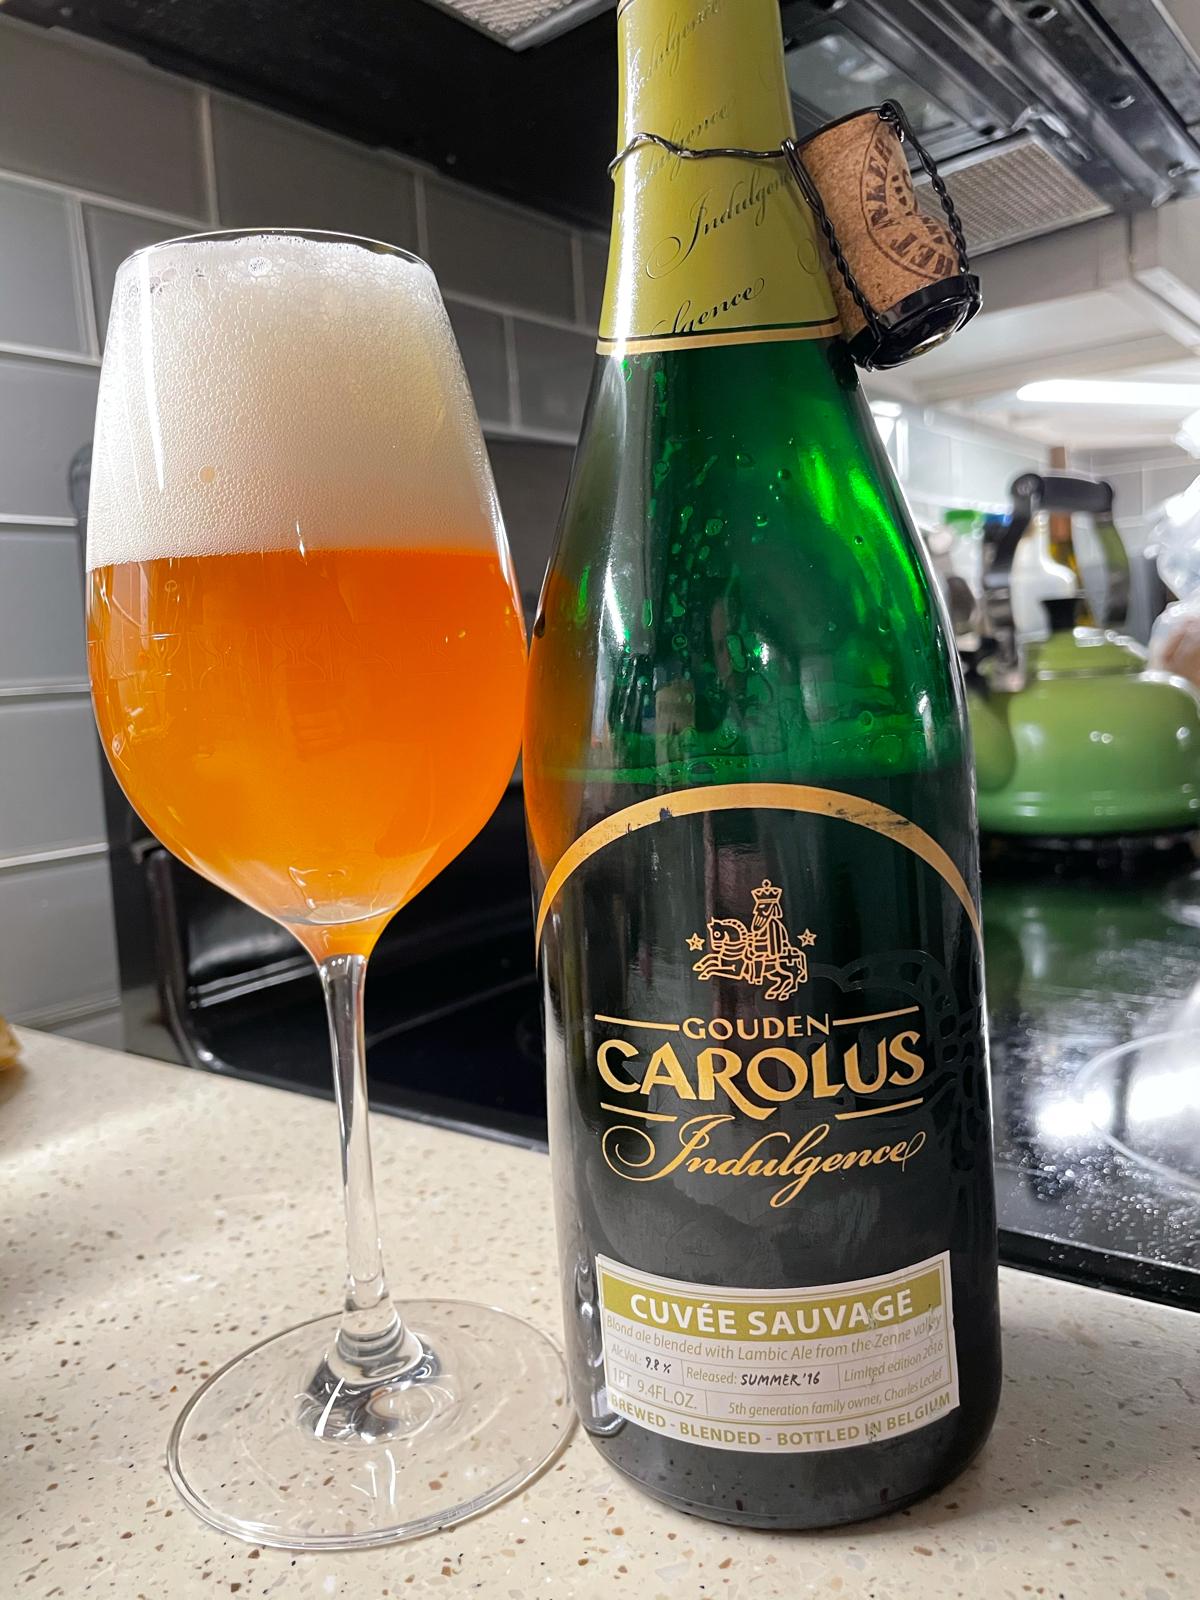 Gouden Carolus Indugence - Cuvée Sauvage (2016 Summer)